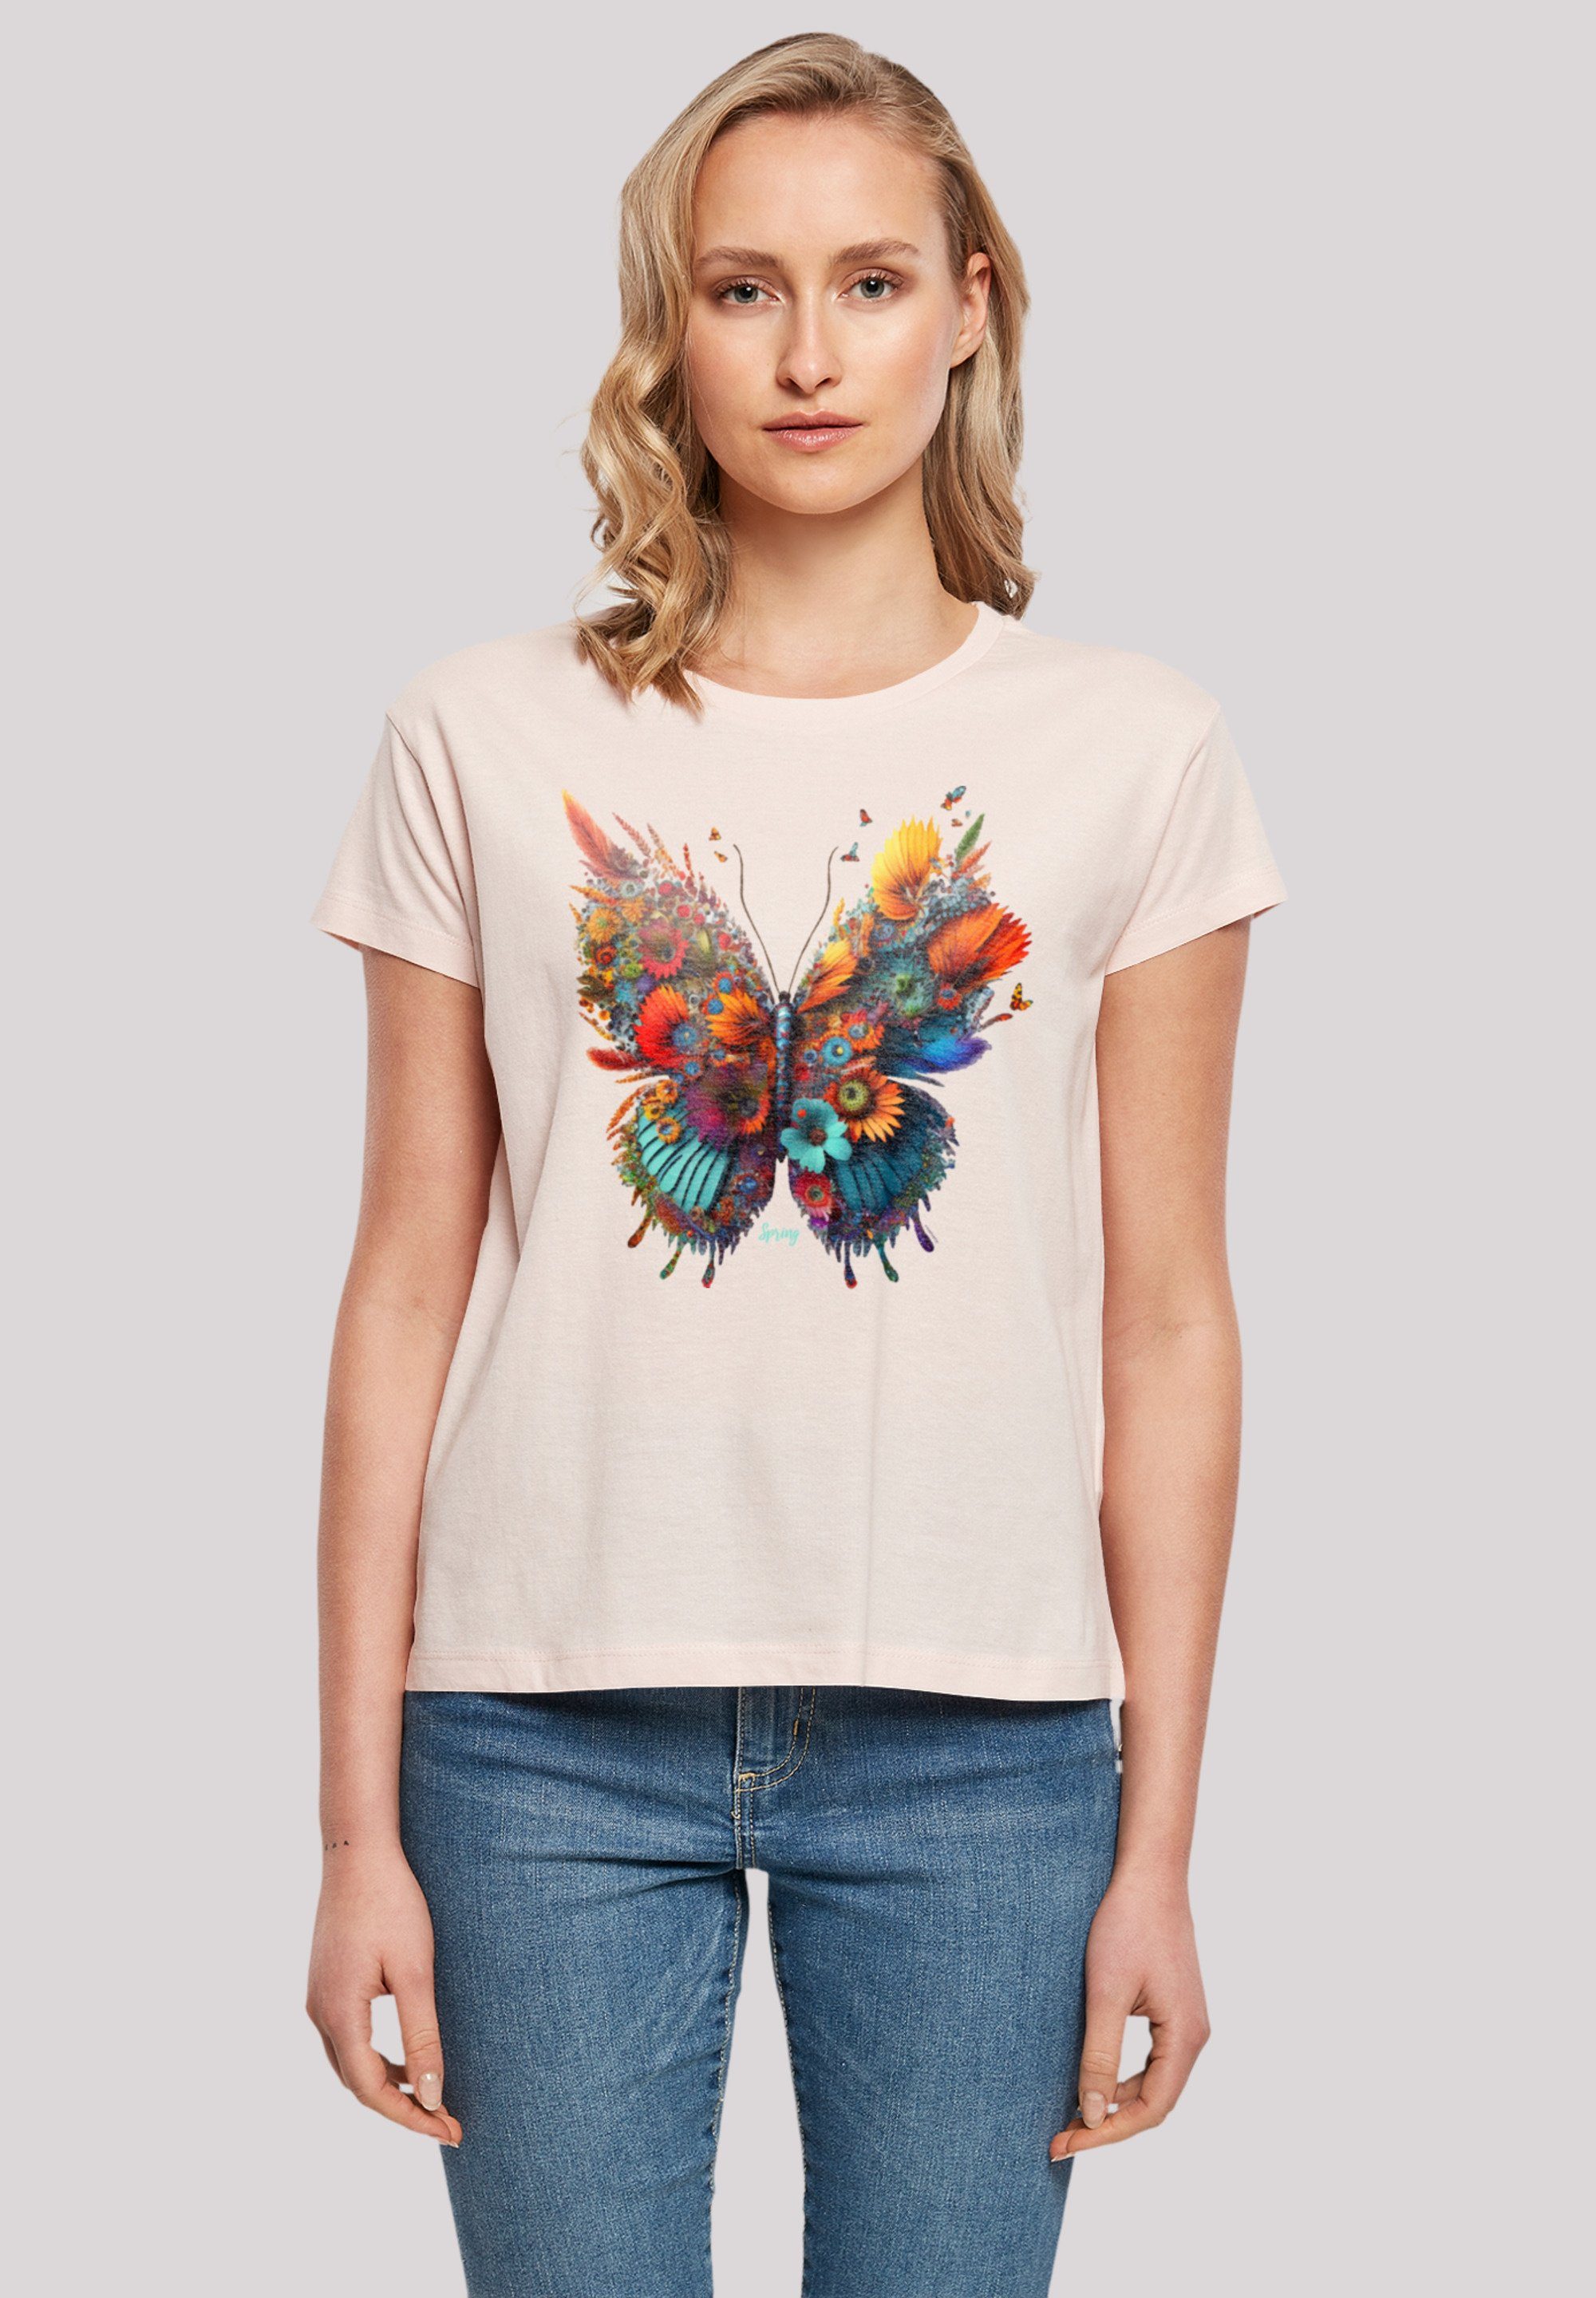 F4NT4STIC T-Shirt Schmetterling T-Shirt Print, Baumwolle, Tragekomfort aus Blume ultimativer